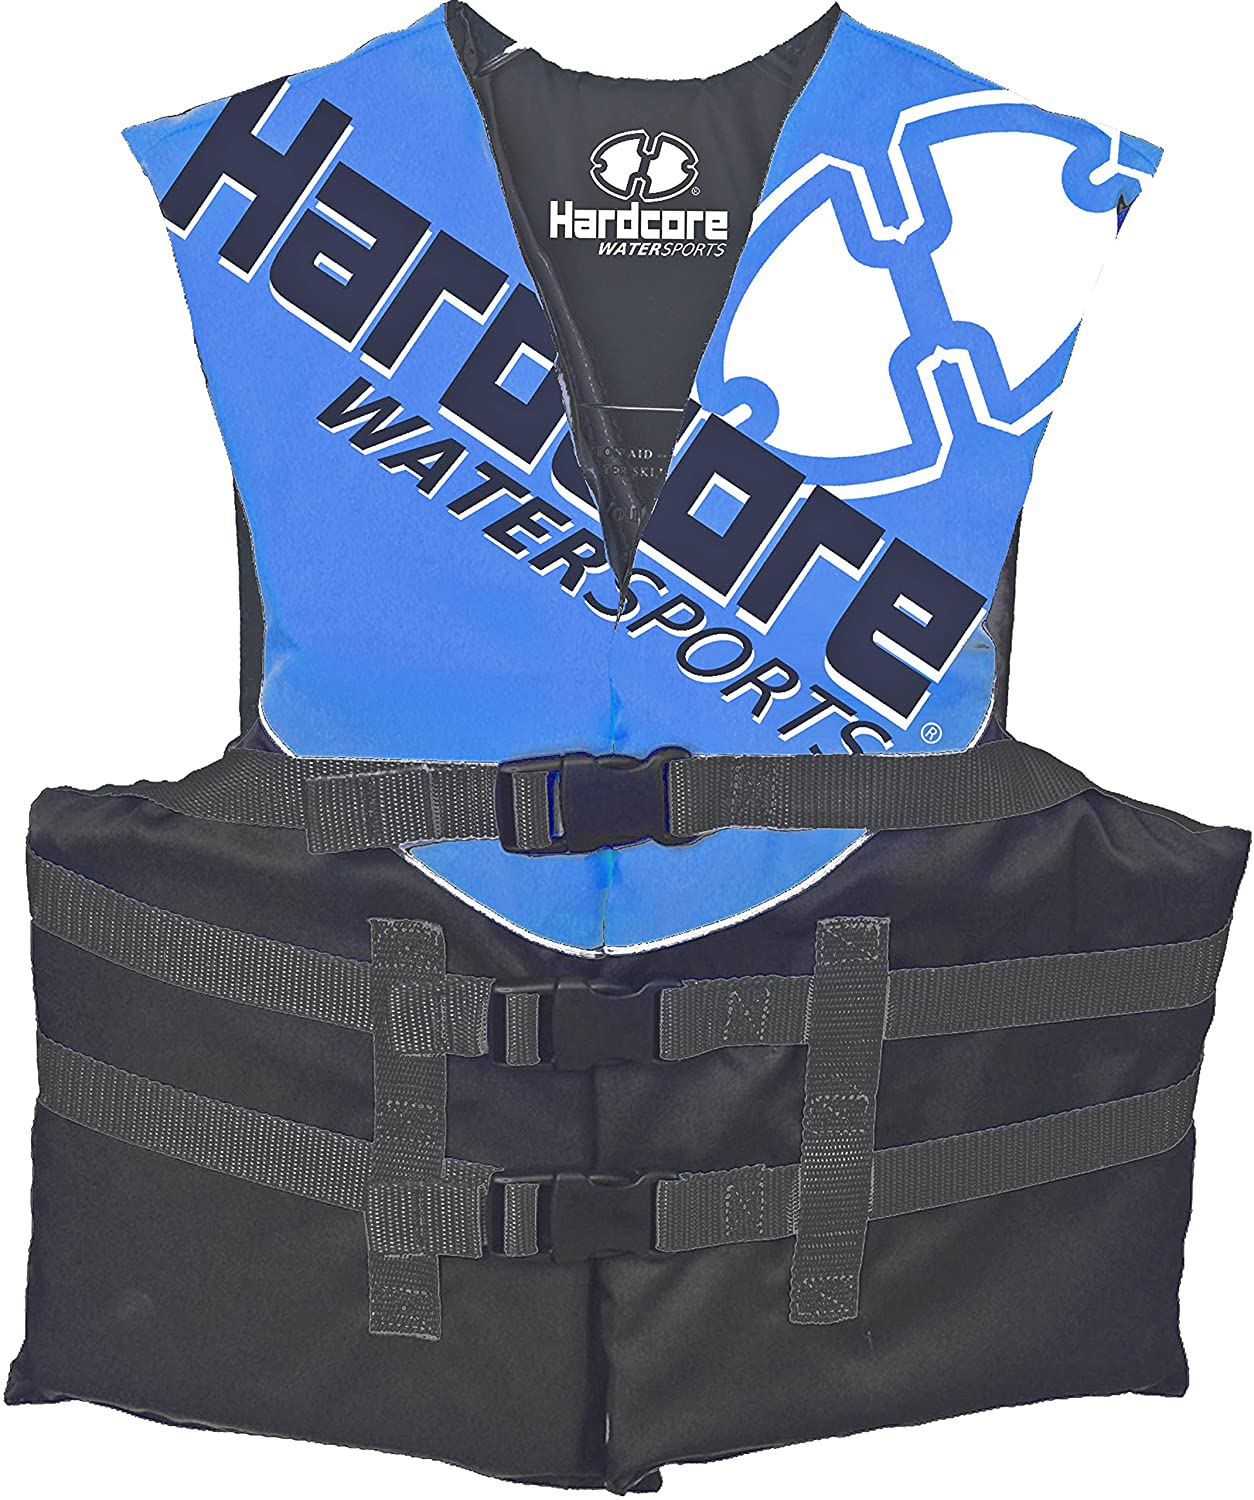 Hardcore Water Sports Life Jacket Vests